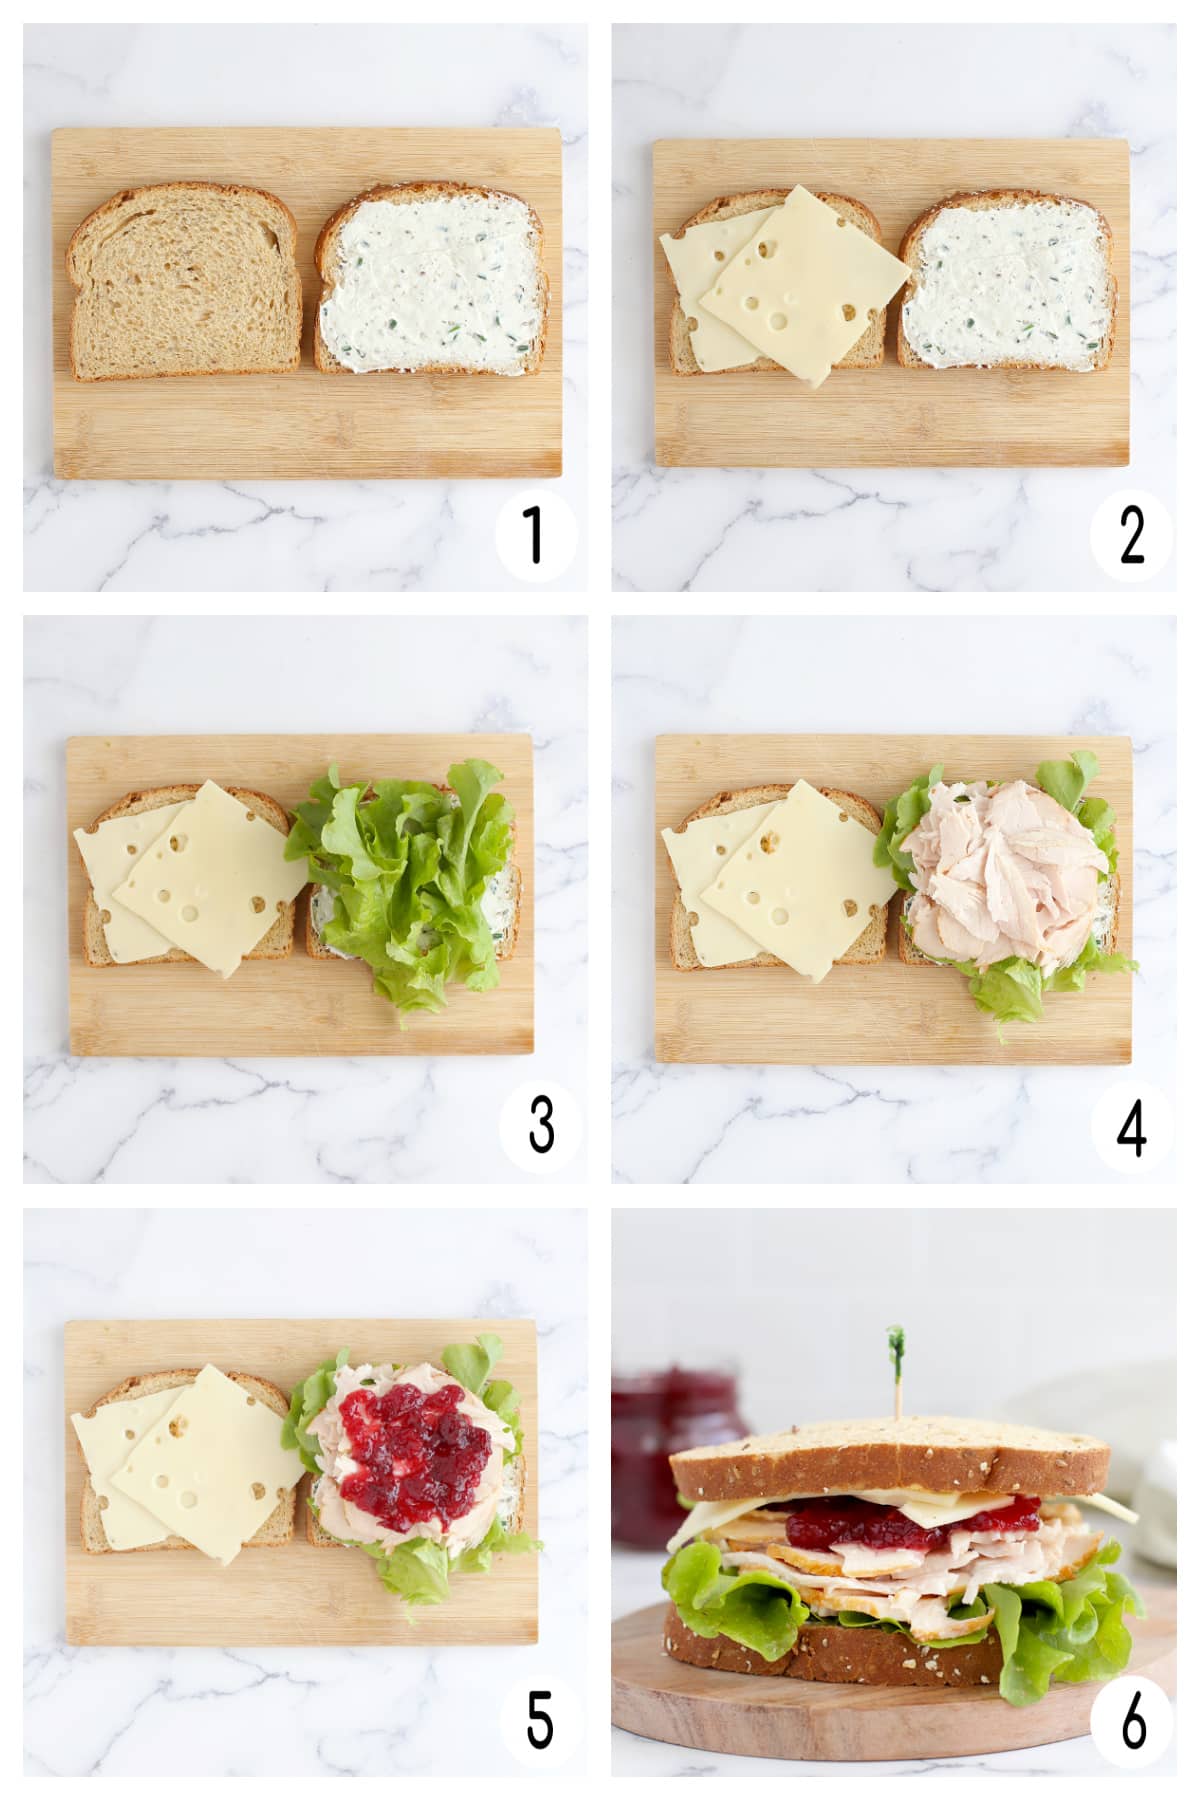 Process s،ts s،wing ،w to make cranberry turkey sandwiches.